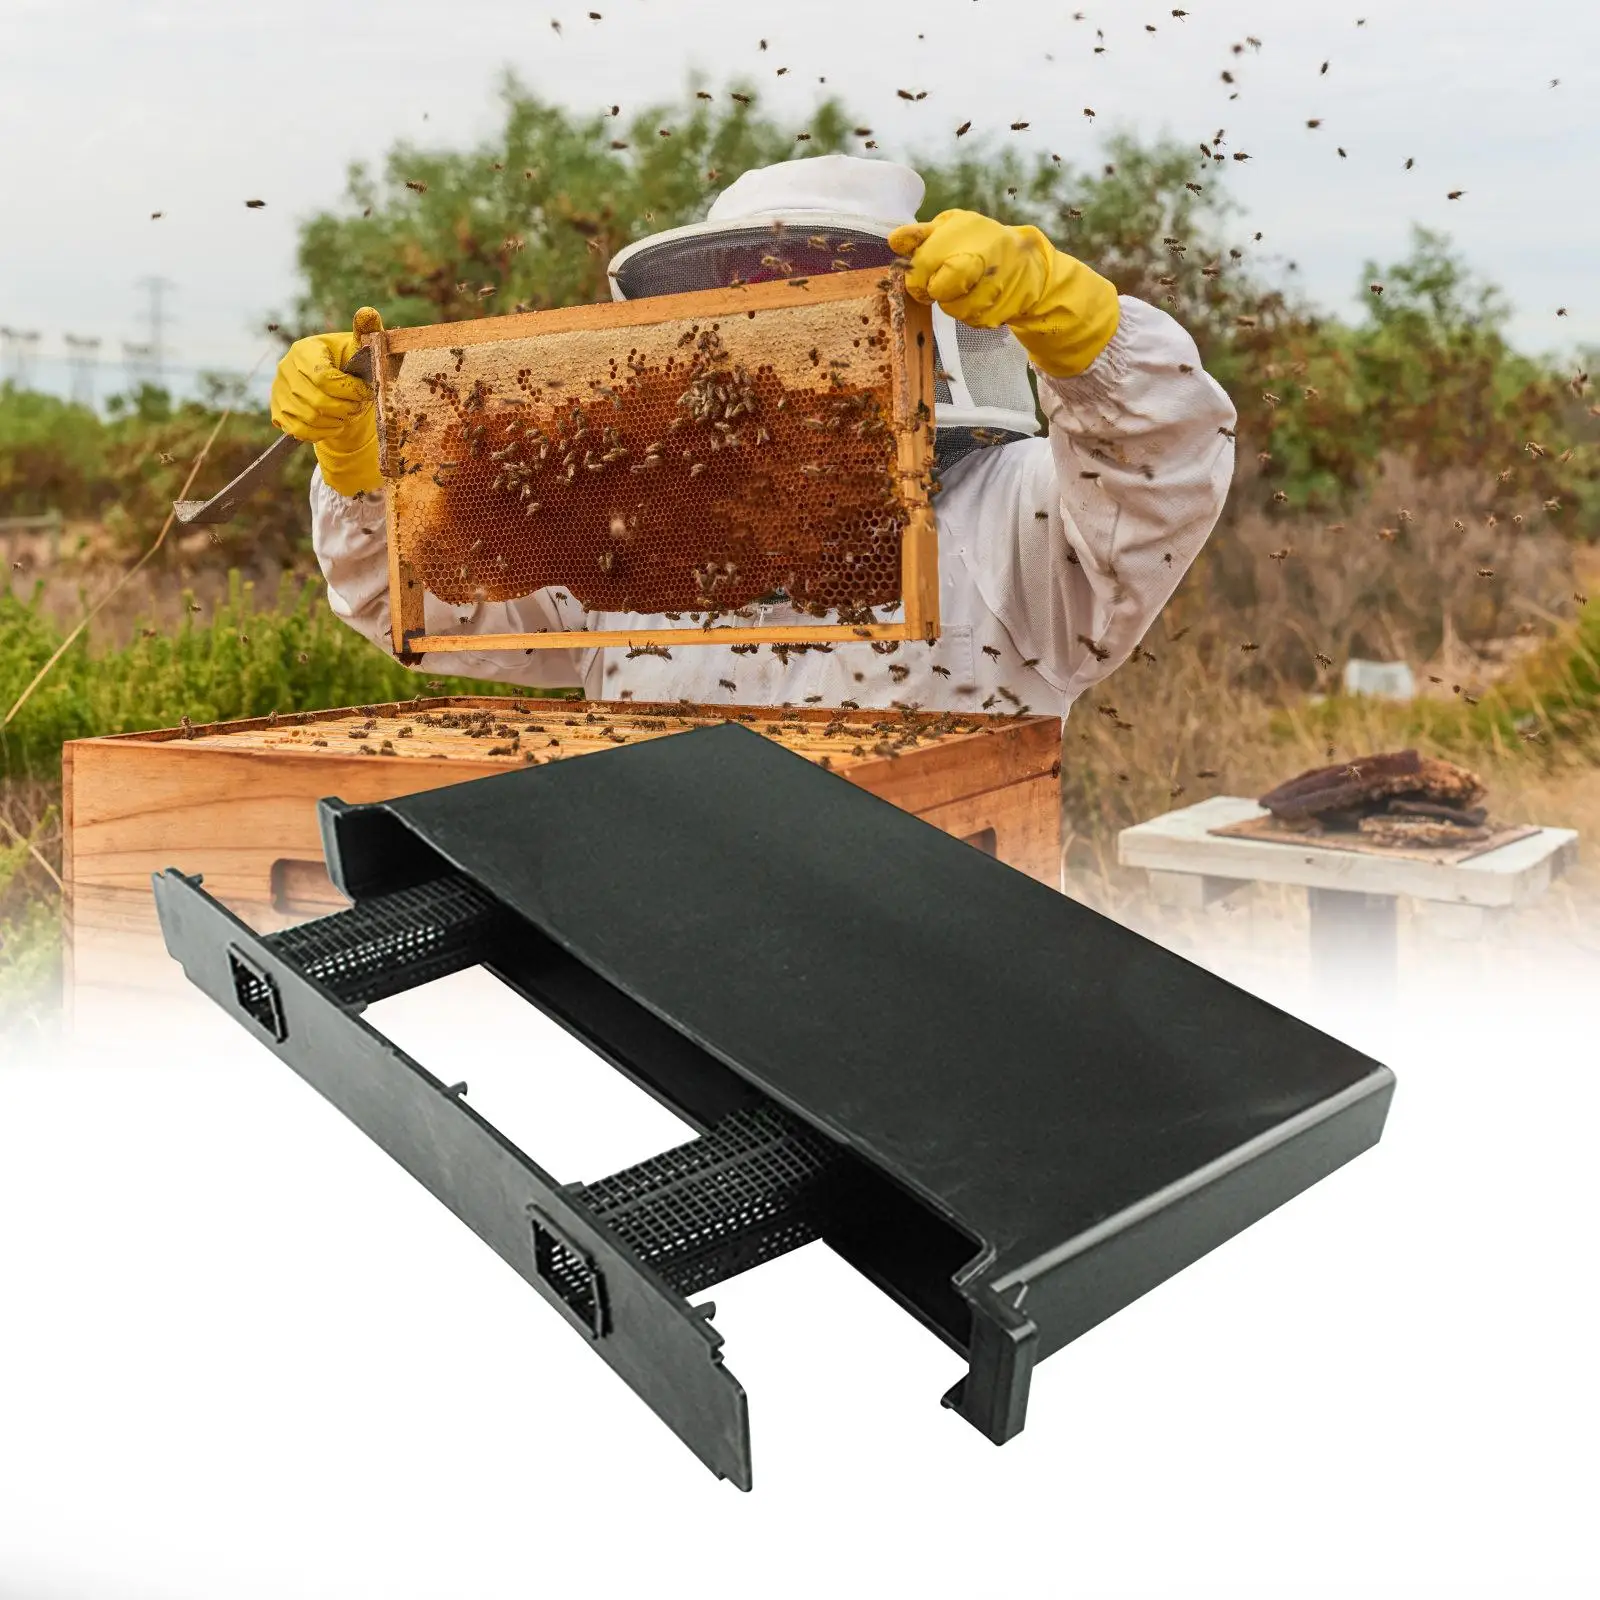 Beehive Water Feeder for Farm Equipment Bee Water Feeder for Beekeeping Portable Practical Bee Drinking Feeder Beehive Feeder